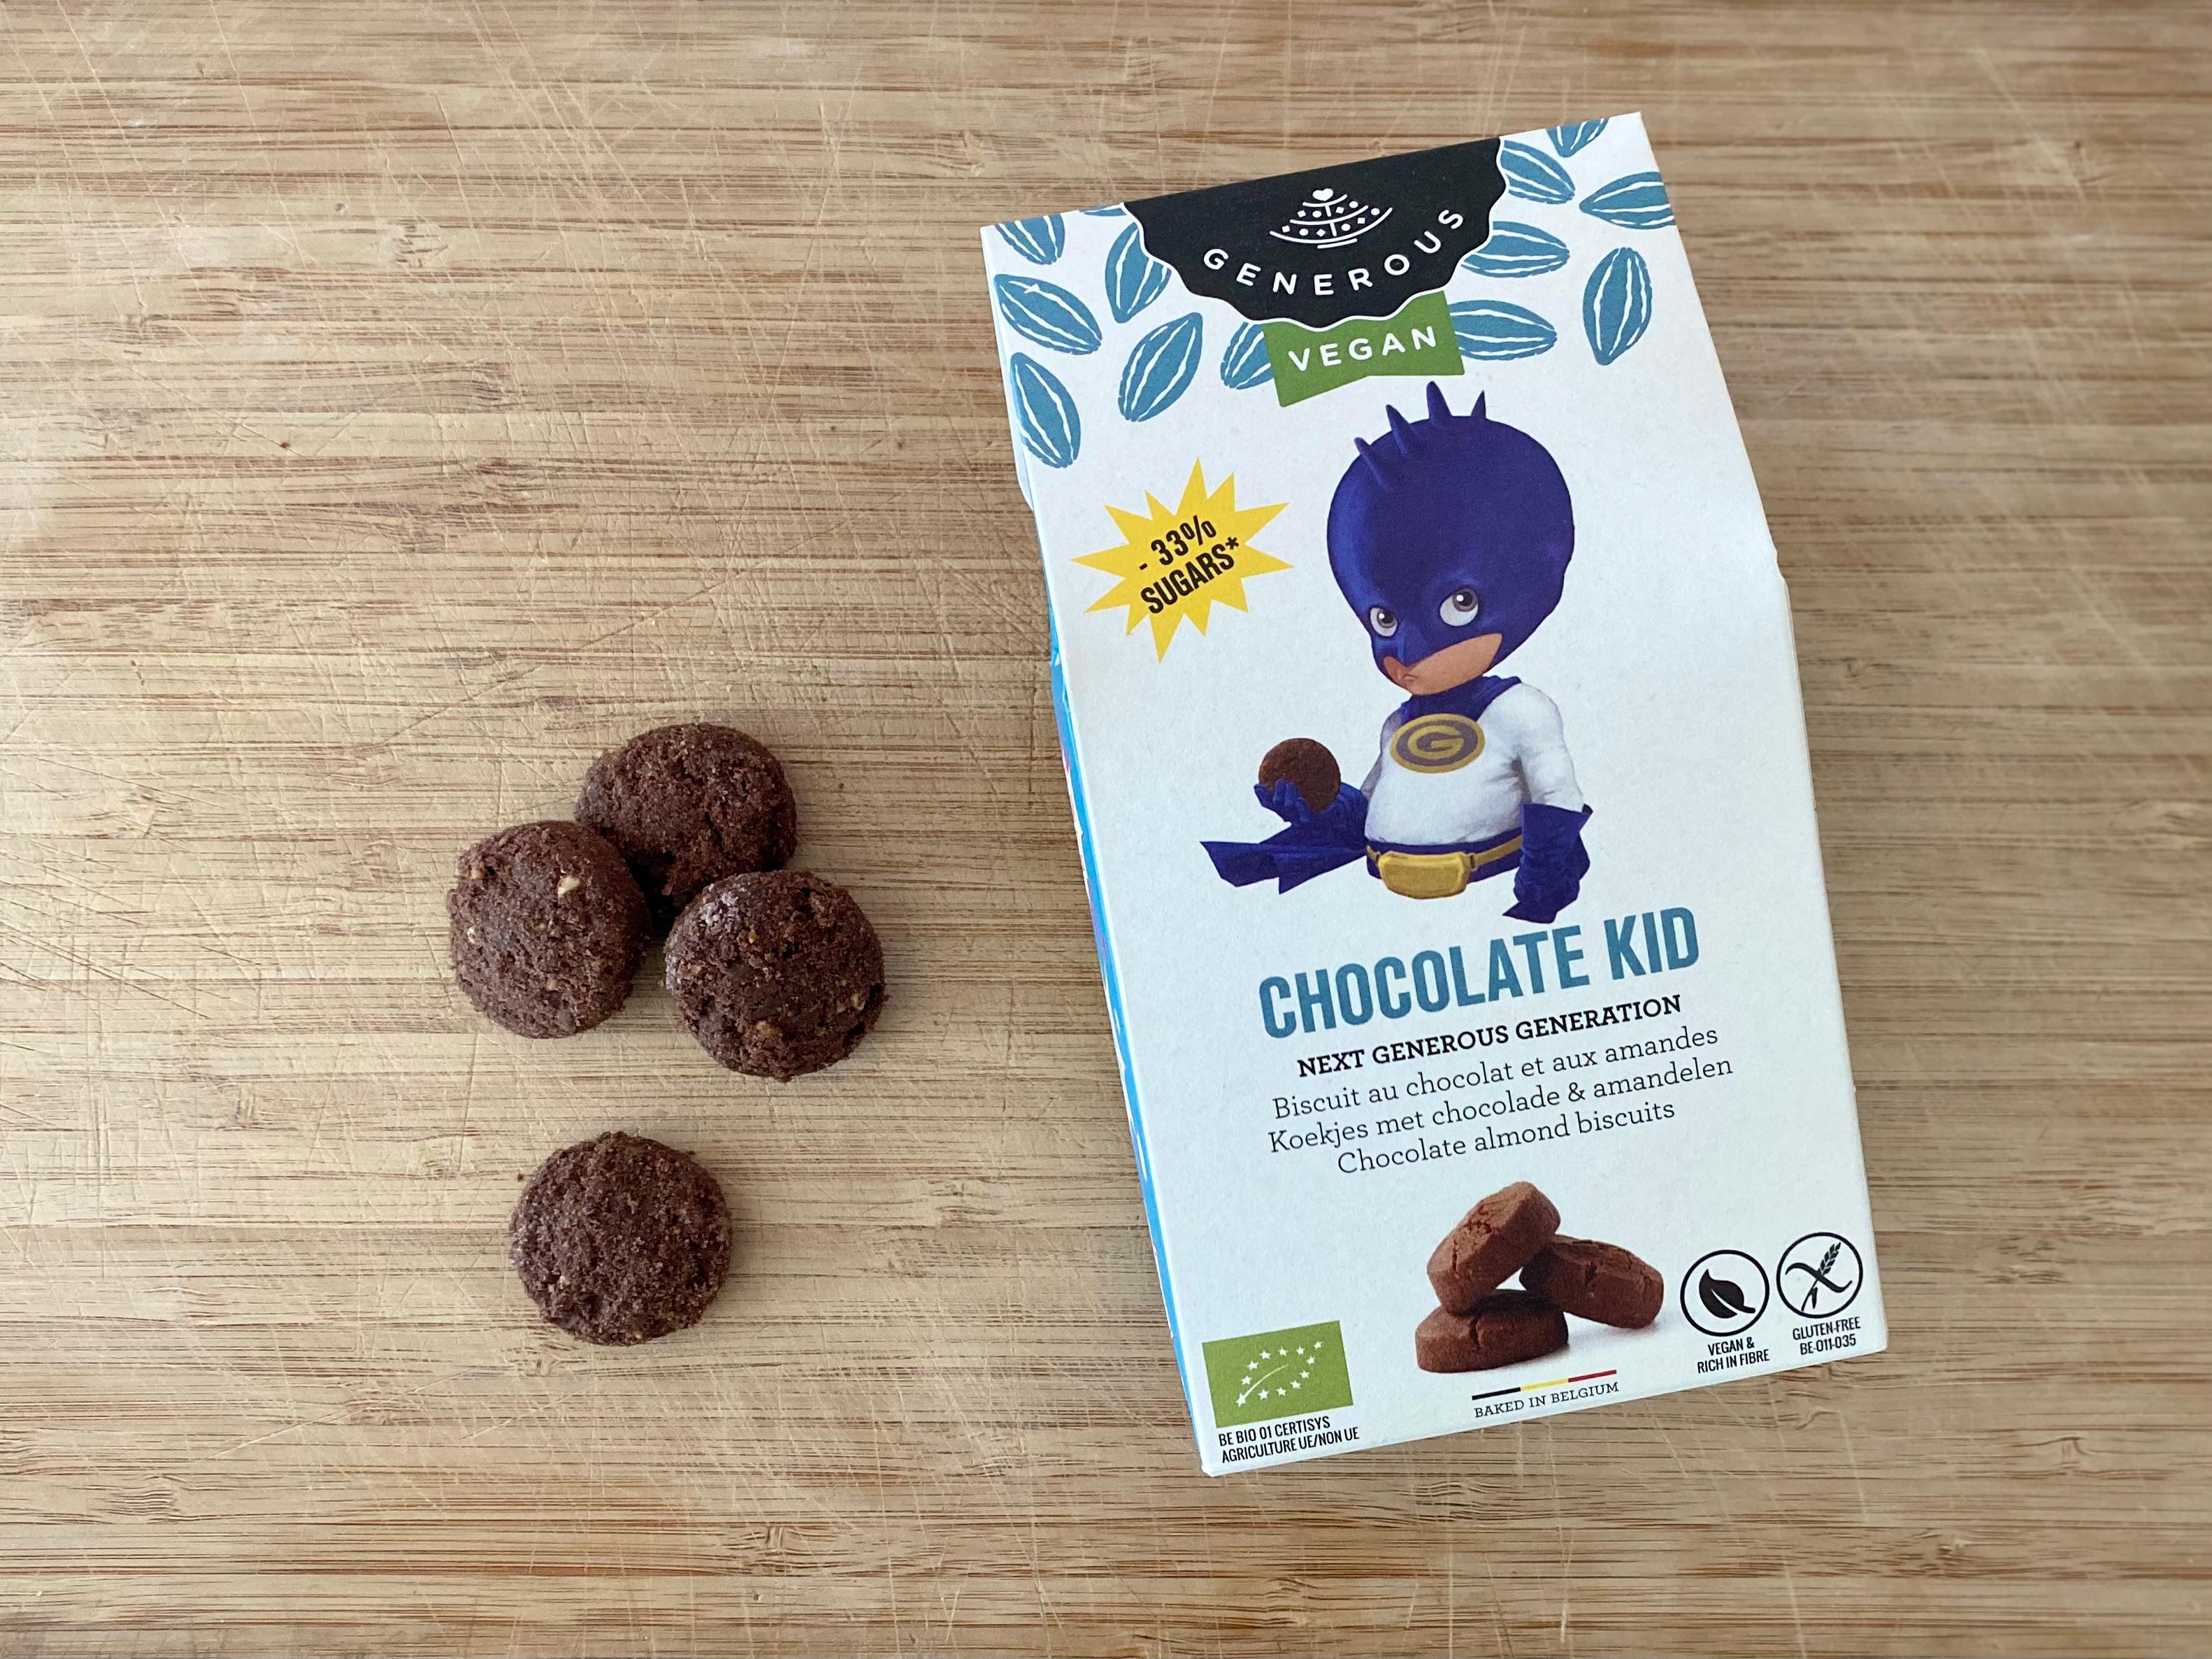 Biscuits au chocolat et aux amandes "Chocolate Kid", sans gluten